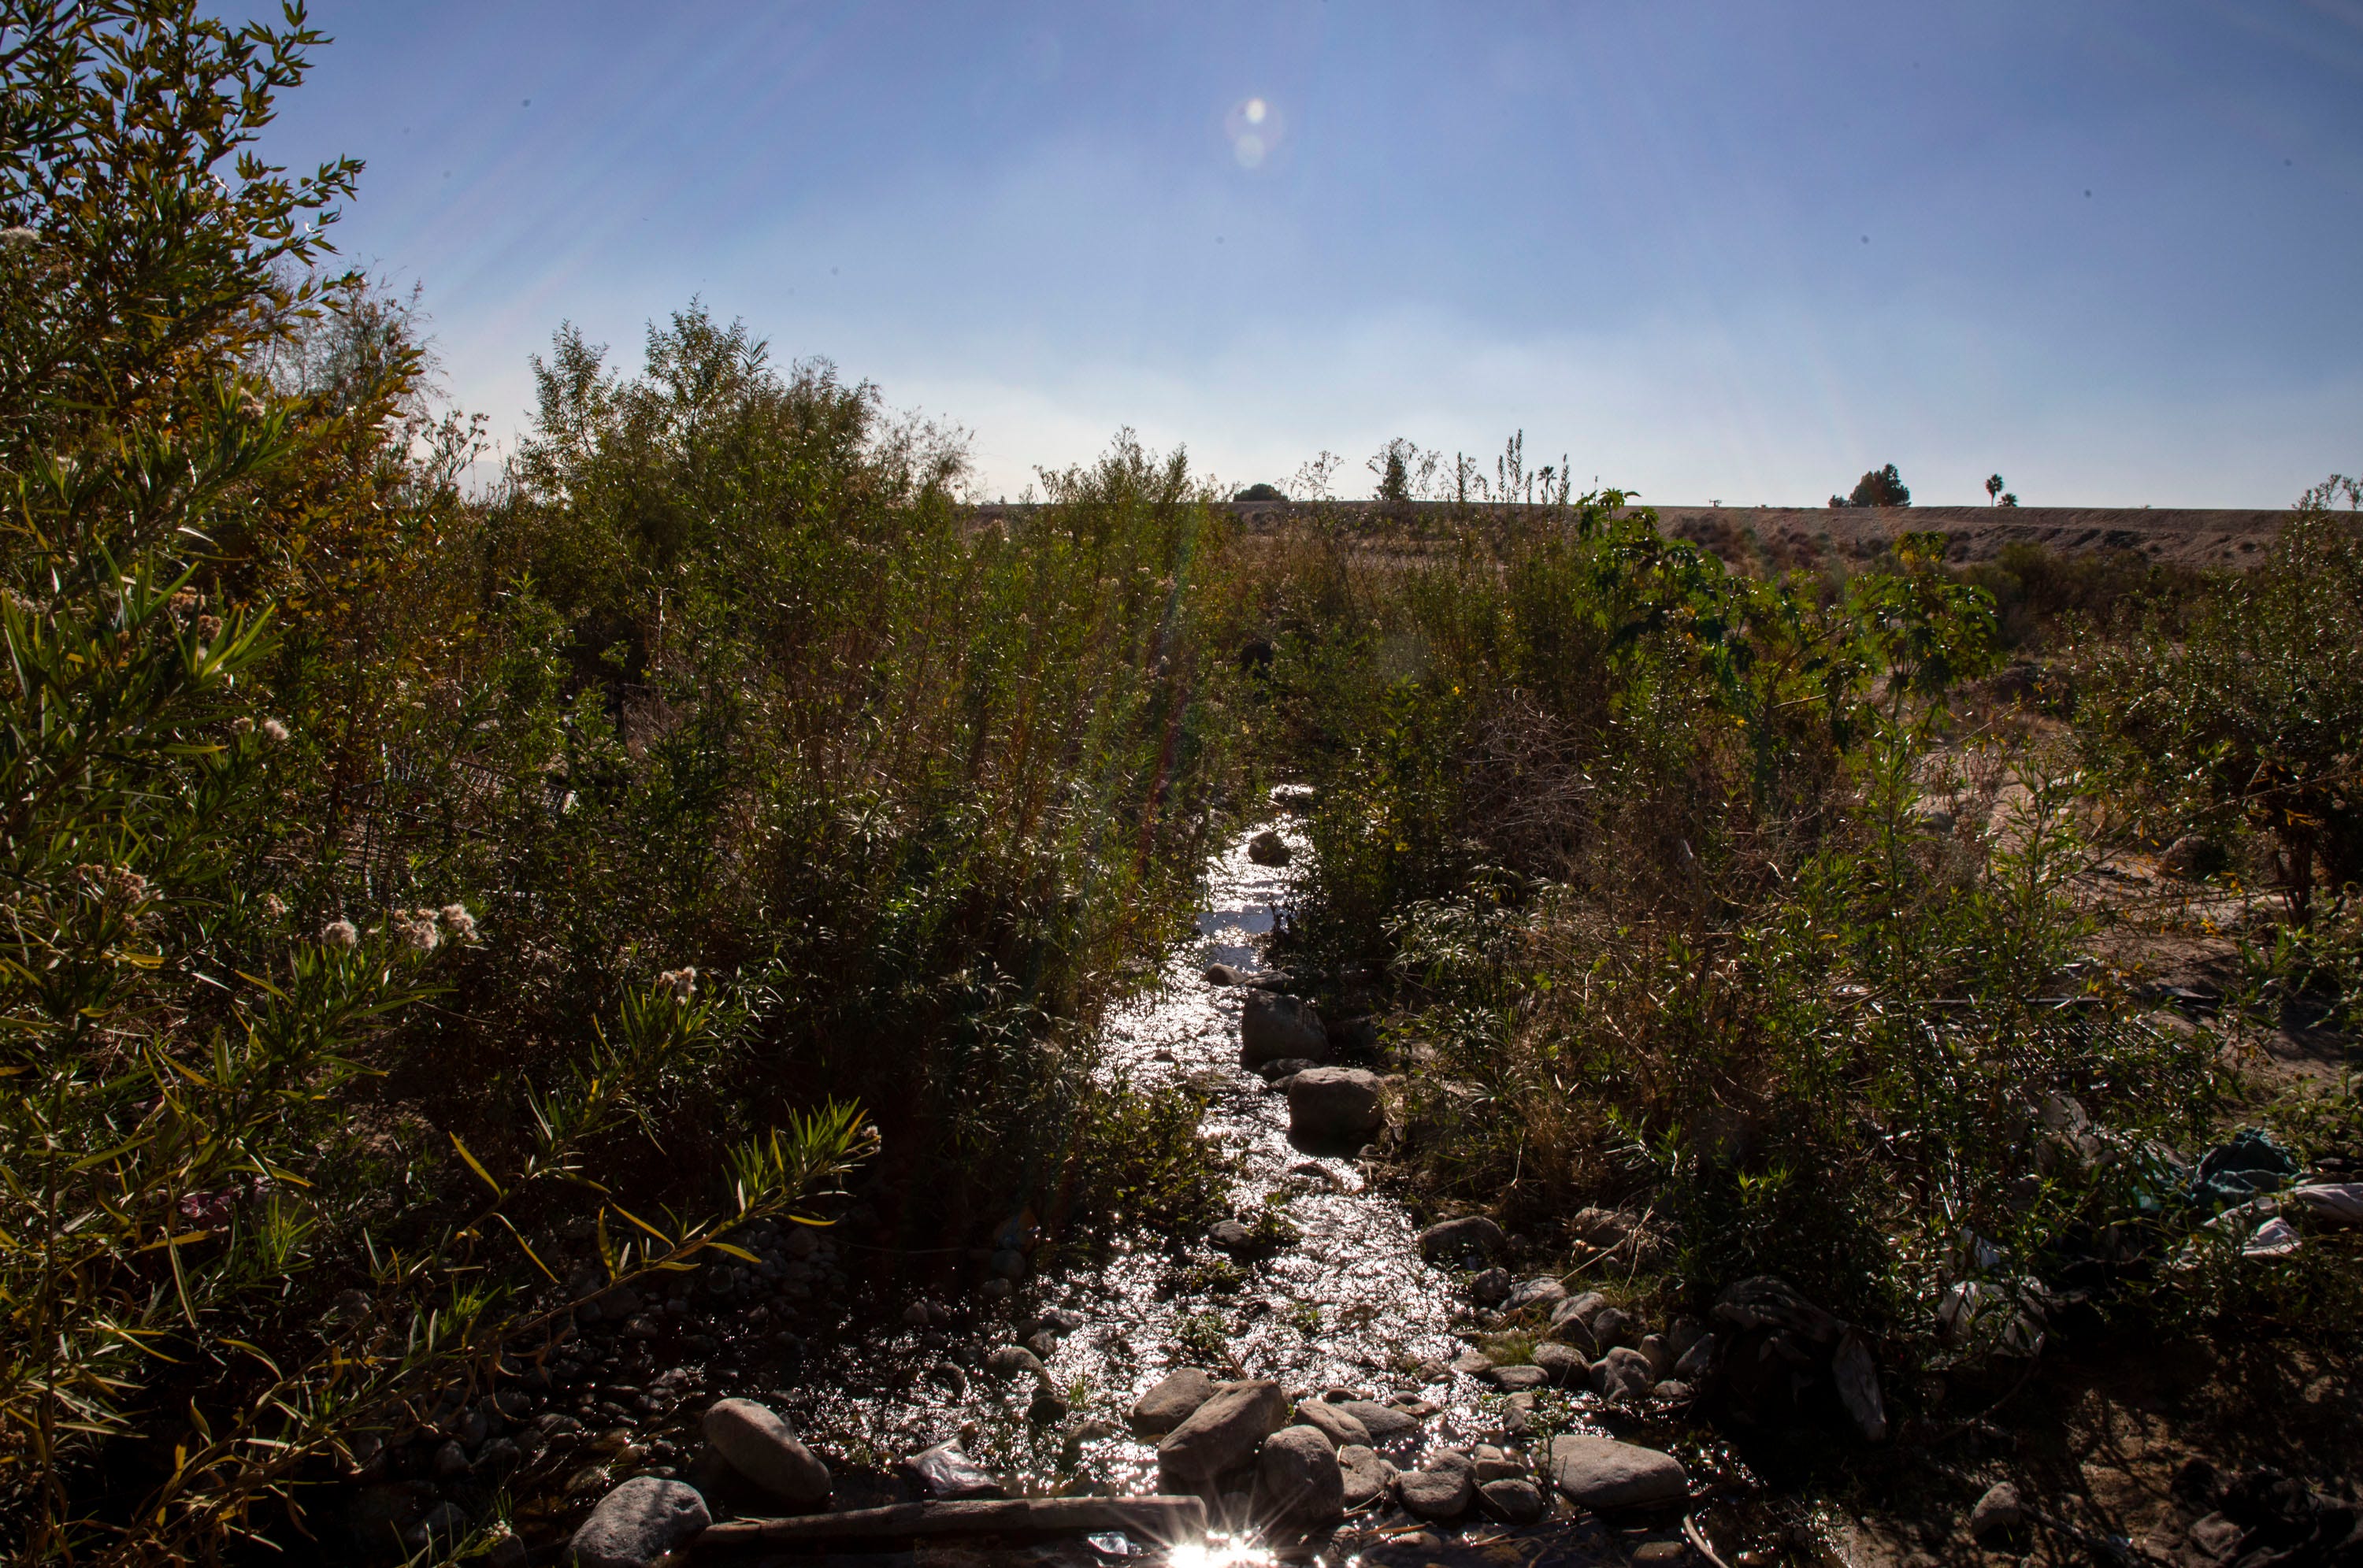 Just beyond a culvert, Twin Creek flows into a desert landscape surrounded by a narrow line of vegetation, Thursday, Nov. 4, 2021, in San Bernardino, Calif.